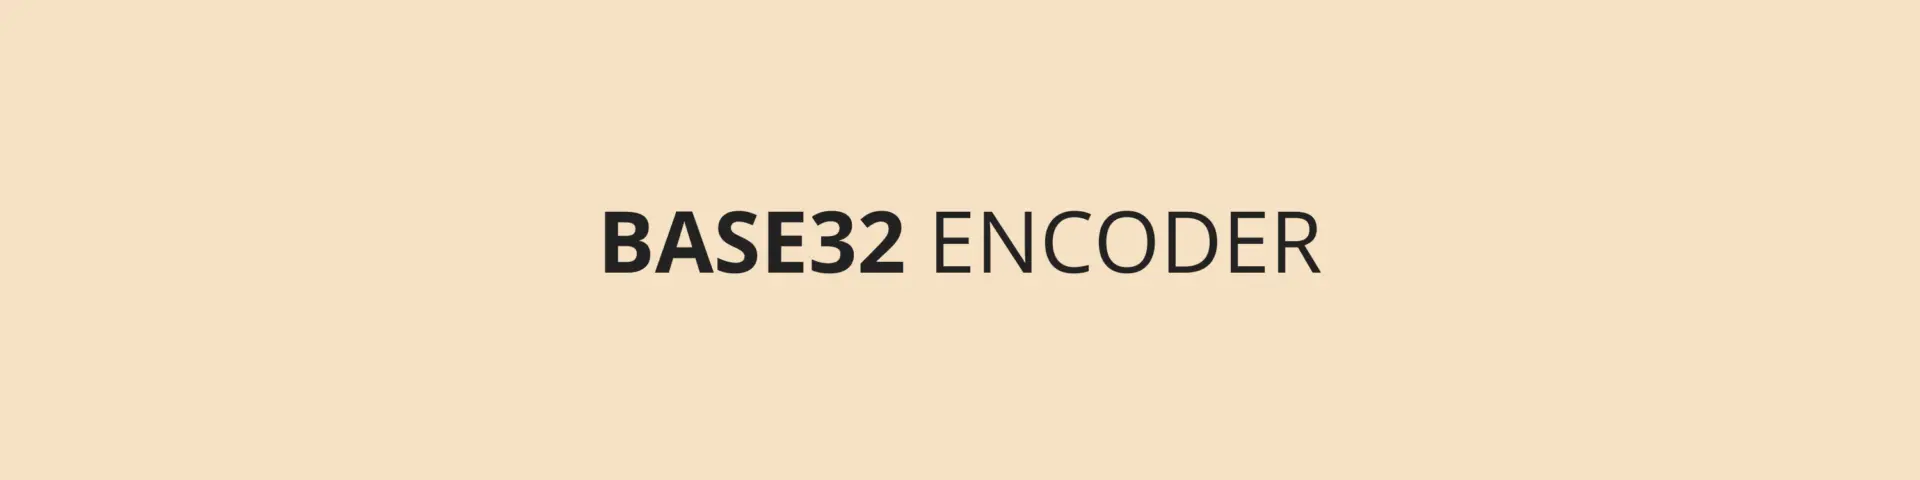 Online Base32 Encoder: Encode Text, String or File to Base32